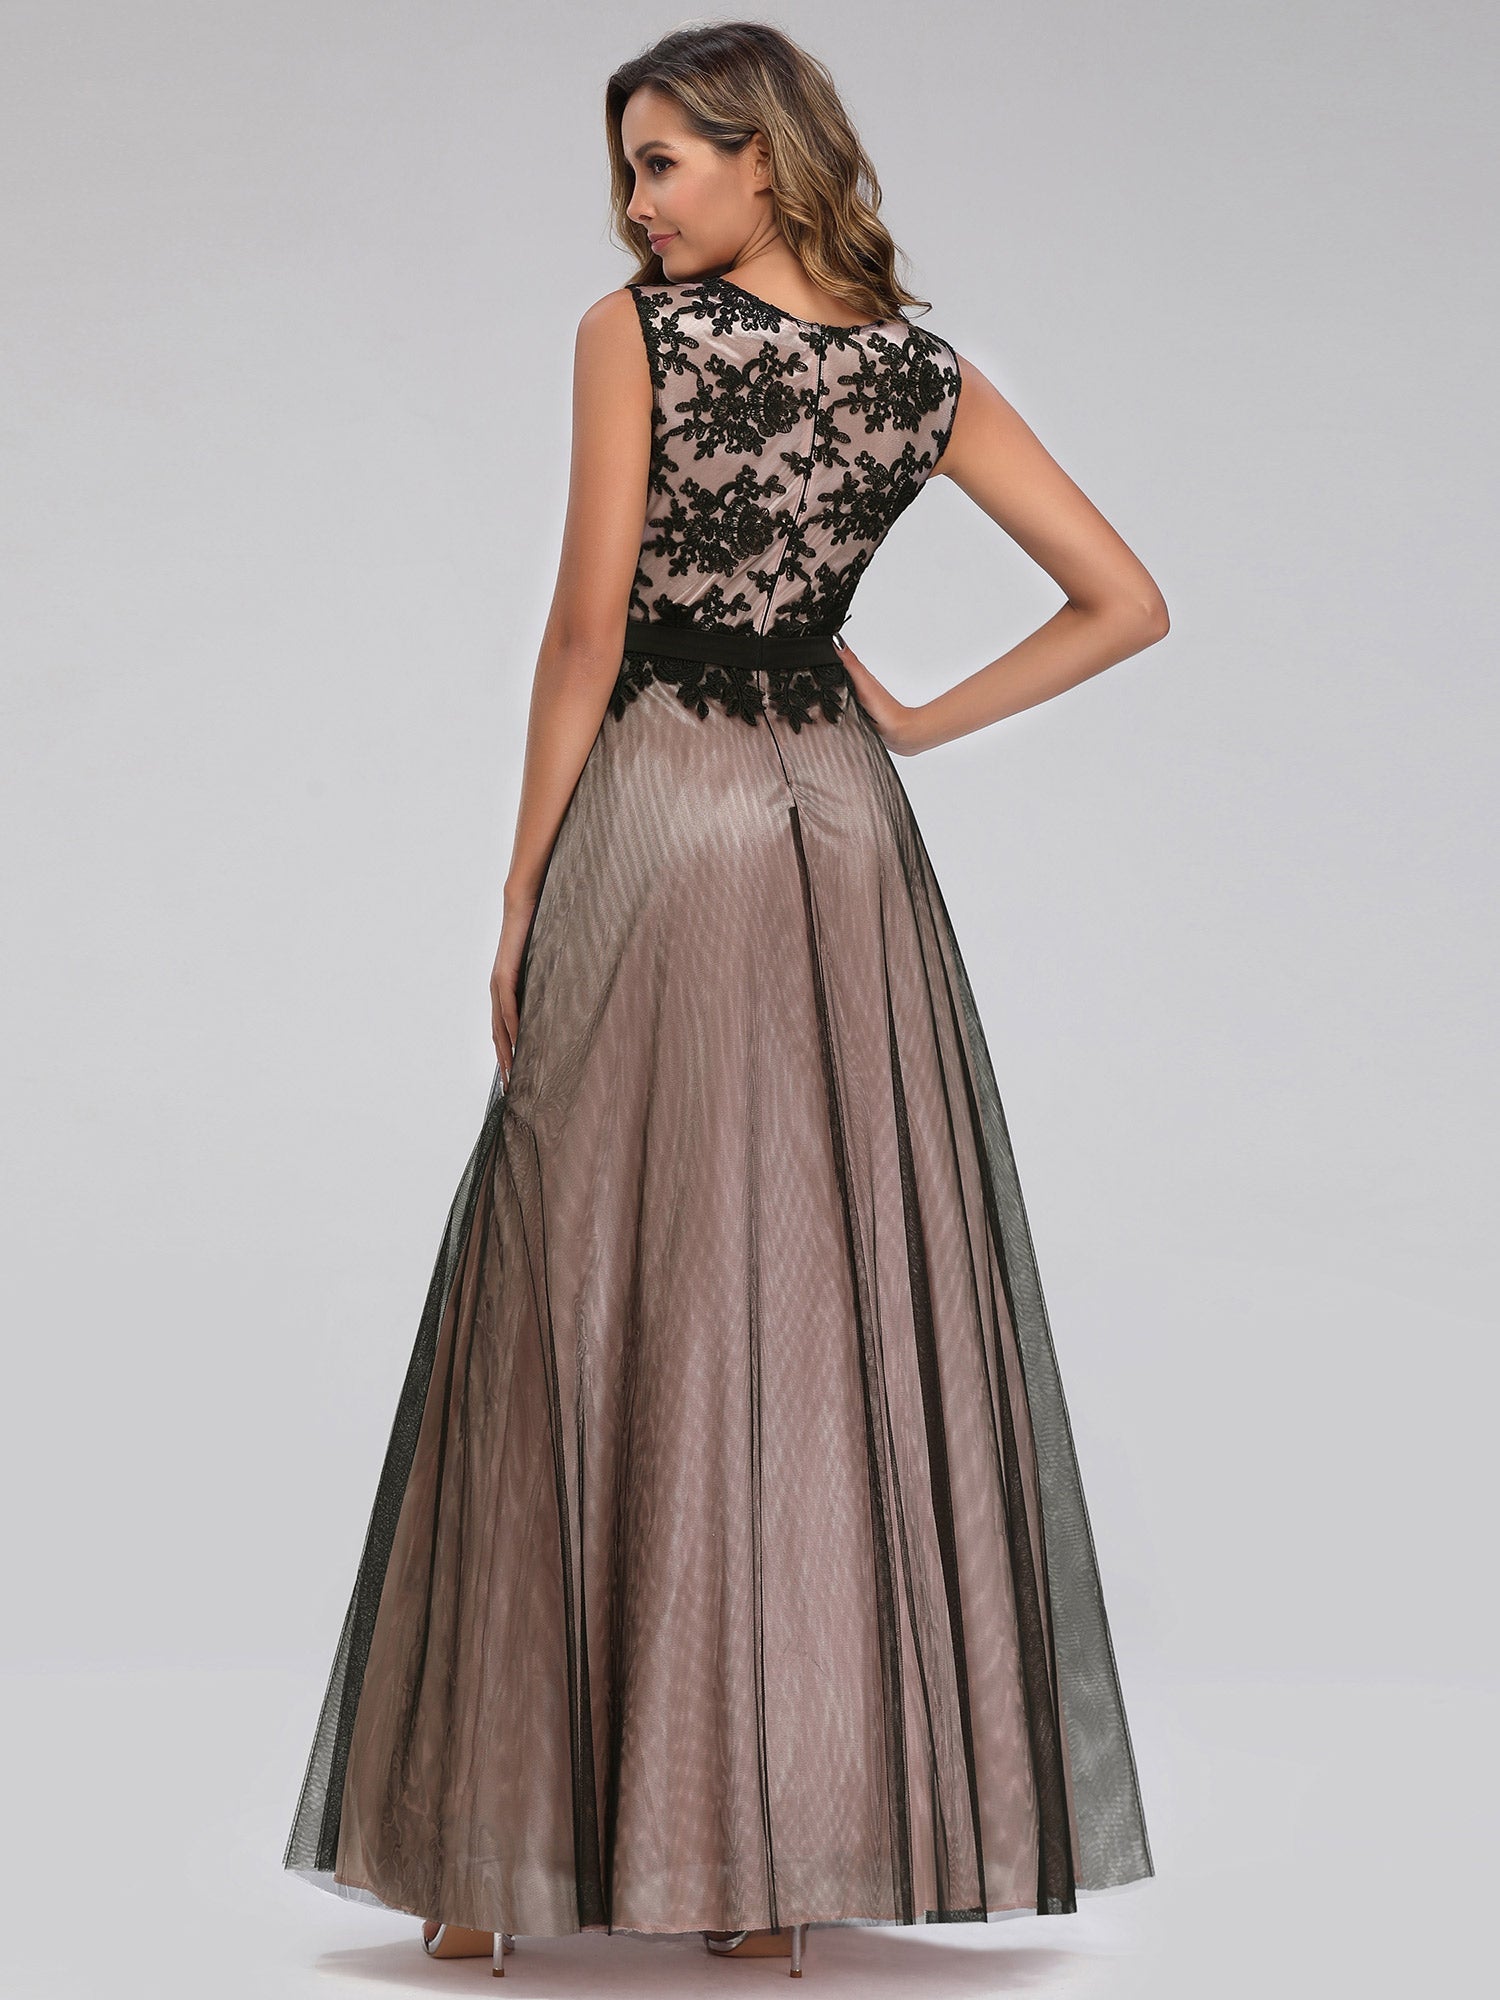 Elegant Black Brocade Evening Dress with Sheer Overlay